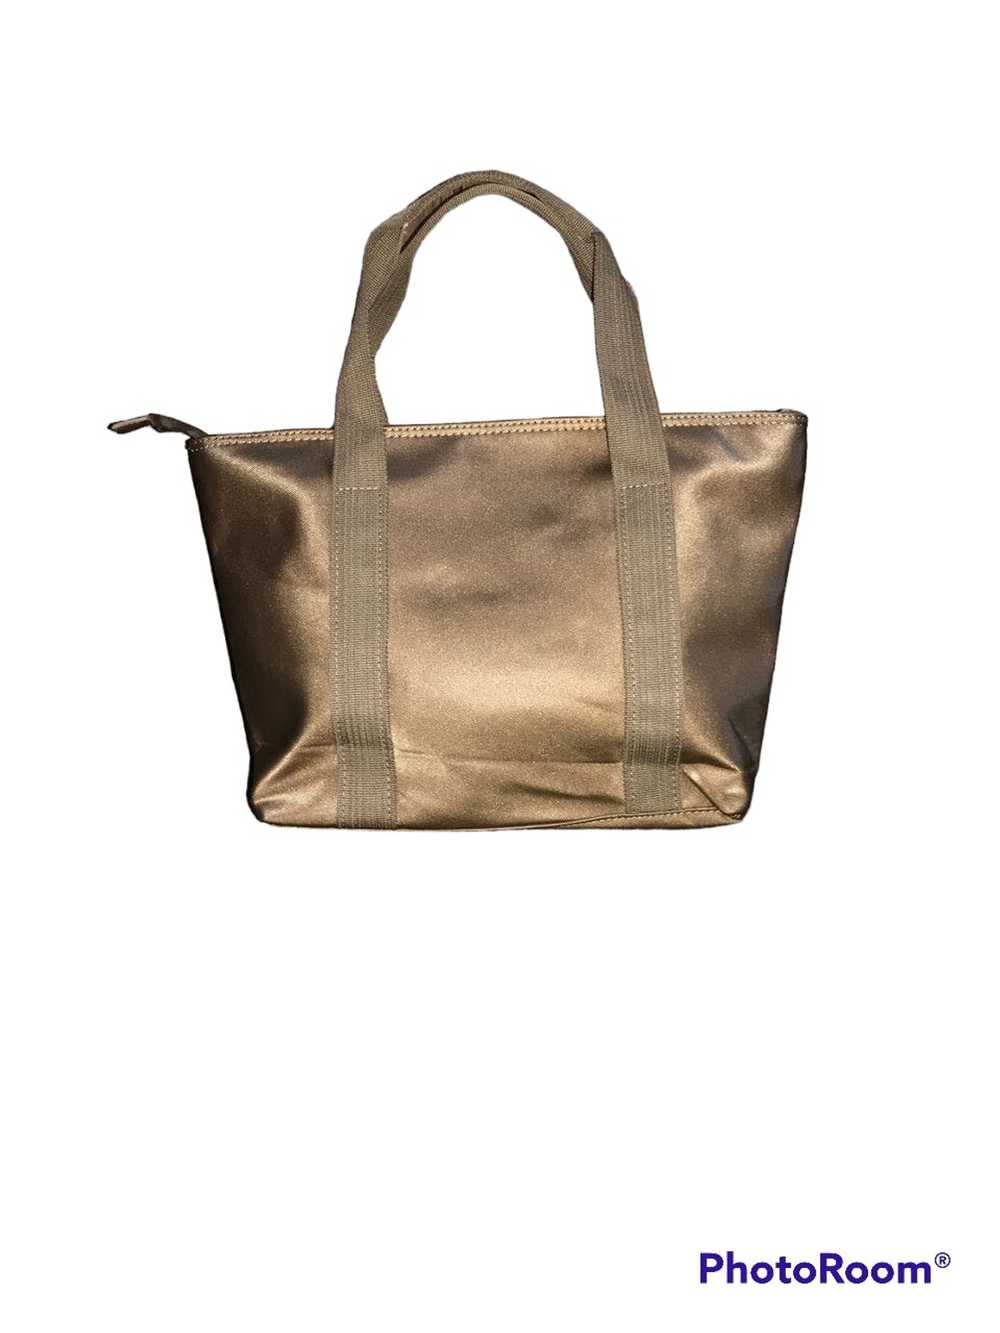 Authentic Luxury MICHAEL KORS Crossbody Brookville Satchel Tote Bag Purse